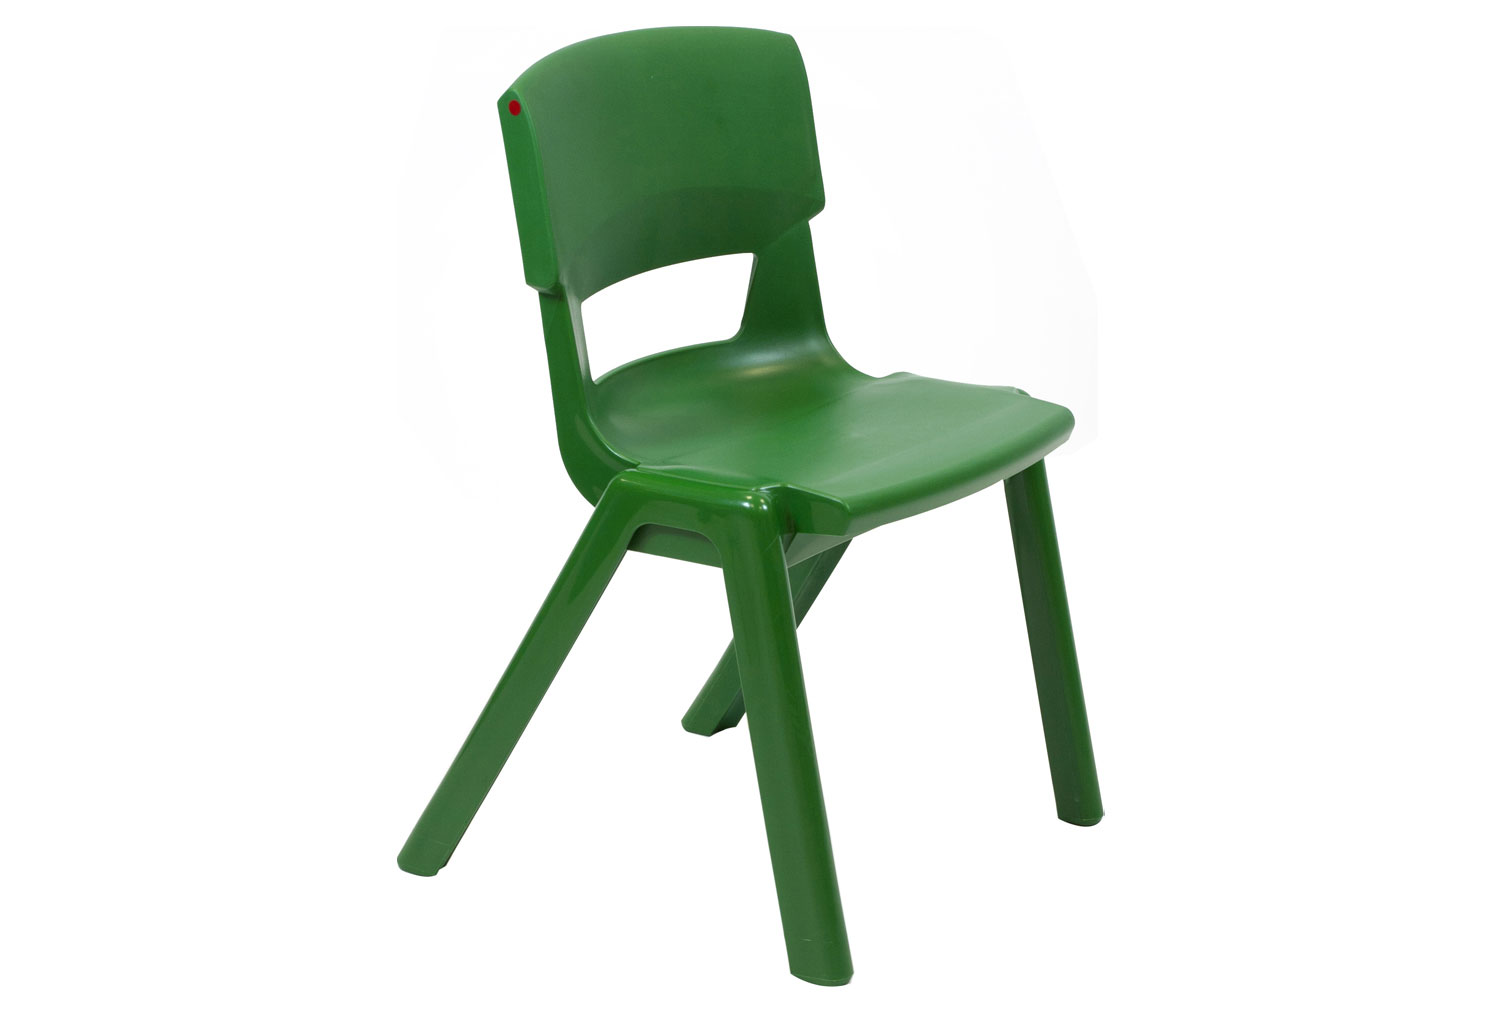 Qty 10 - Postura+ Classroom Chair, 8-11 Years - 34wx31dx38h (cm), Green